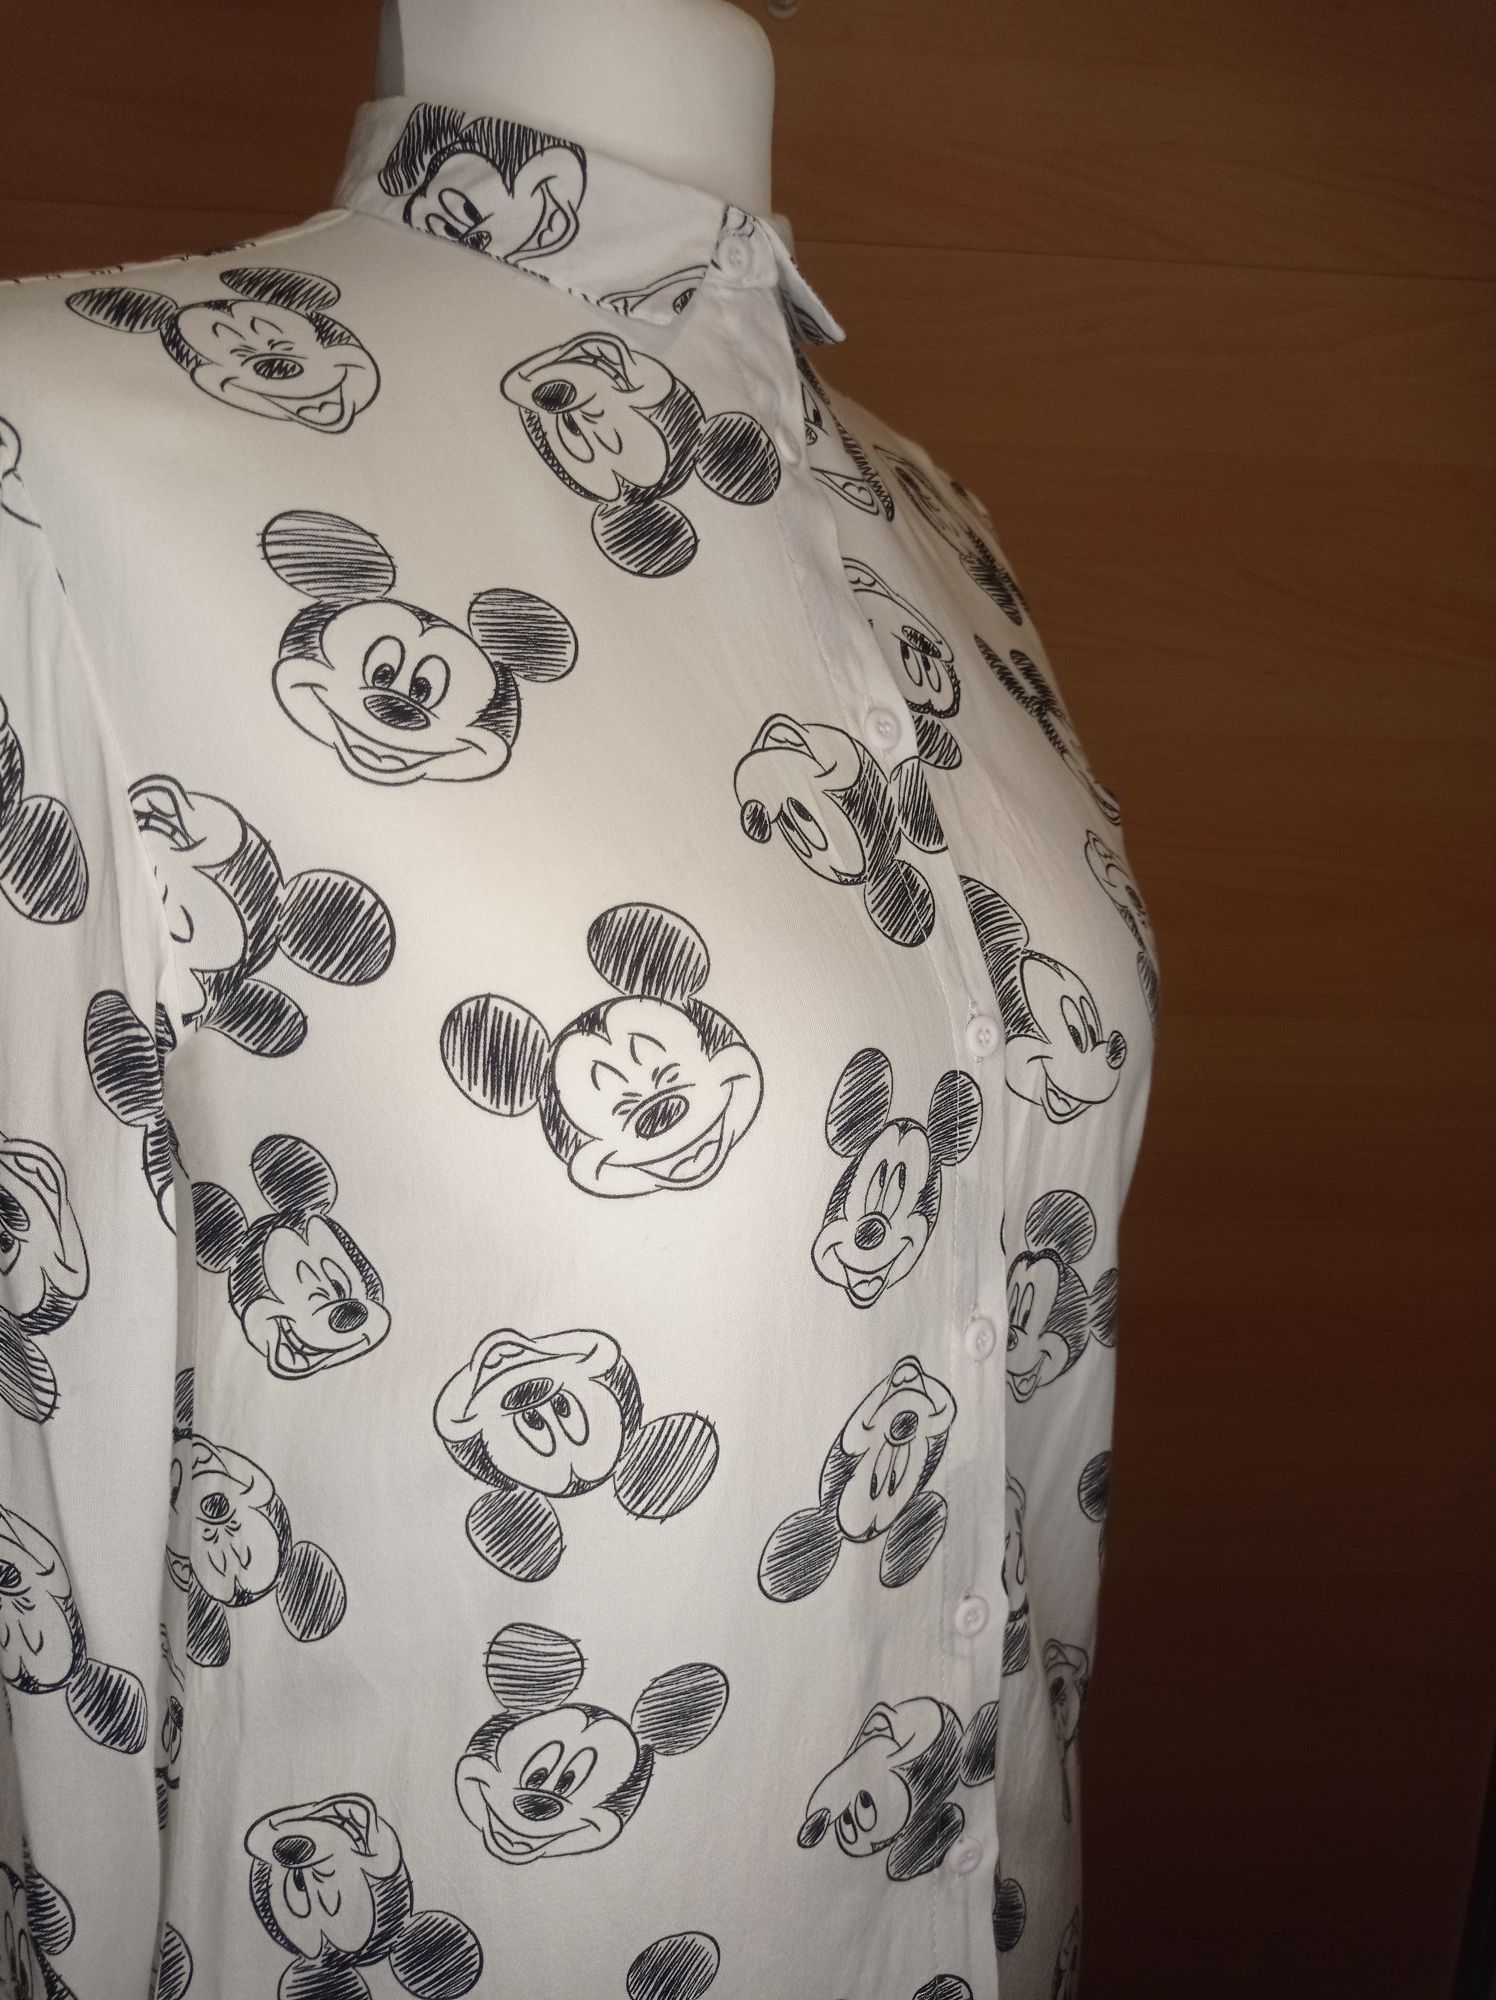 Biała koszula we wzór Myszki Miki.